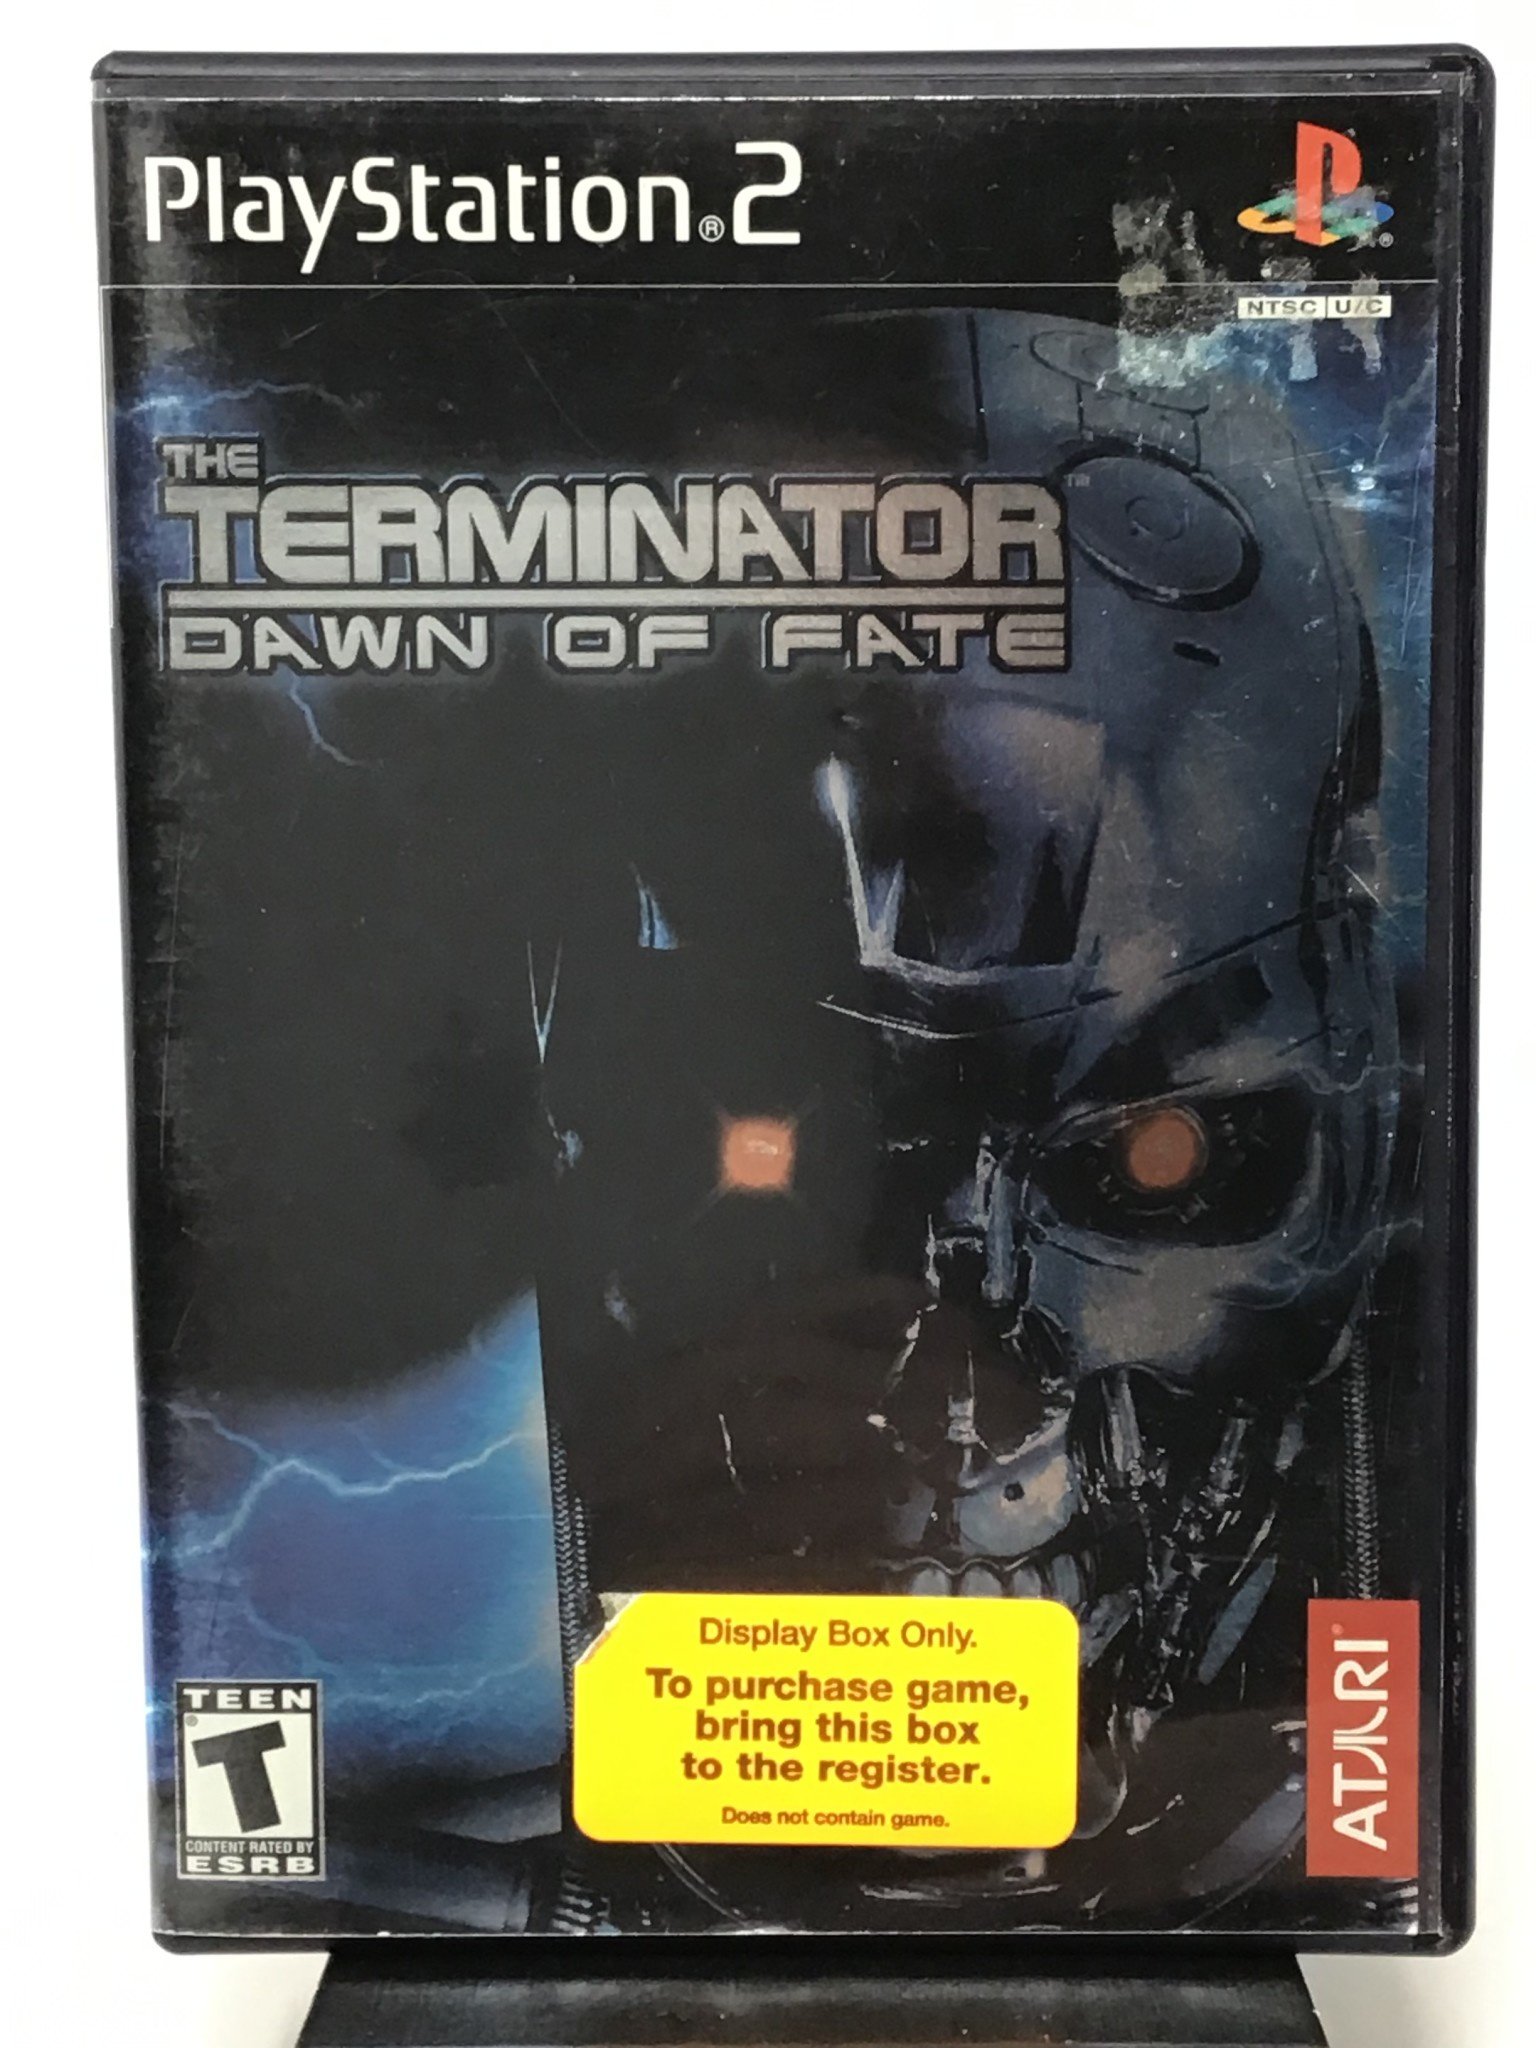 The Terminator: Dawn of Fate (PS2 - NO MANUAL) - Cape Fear Games